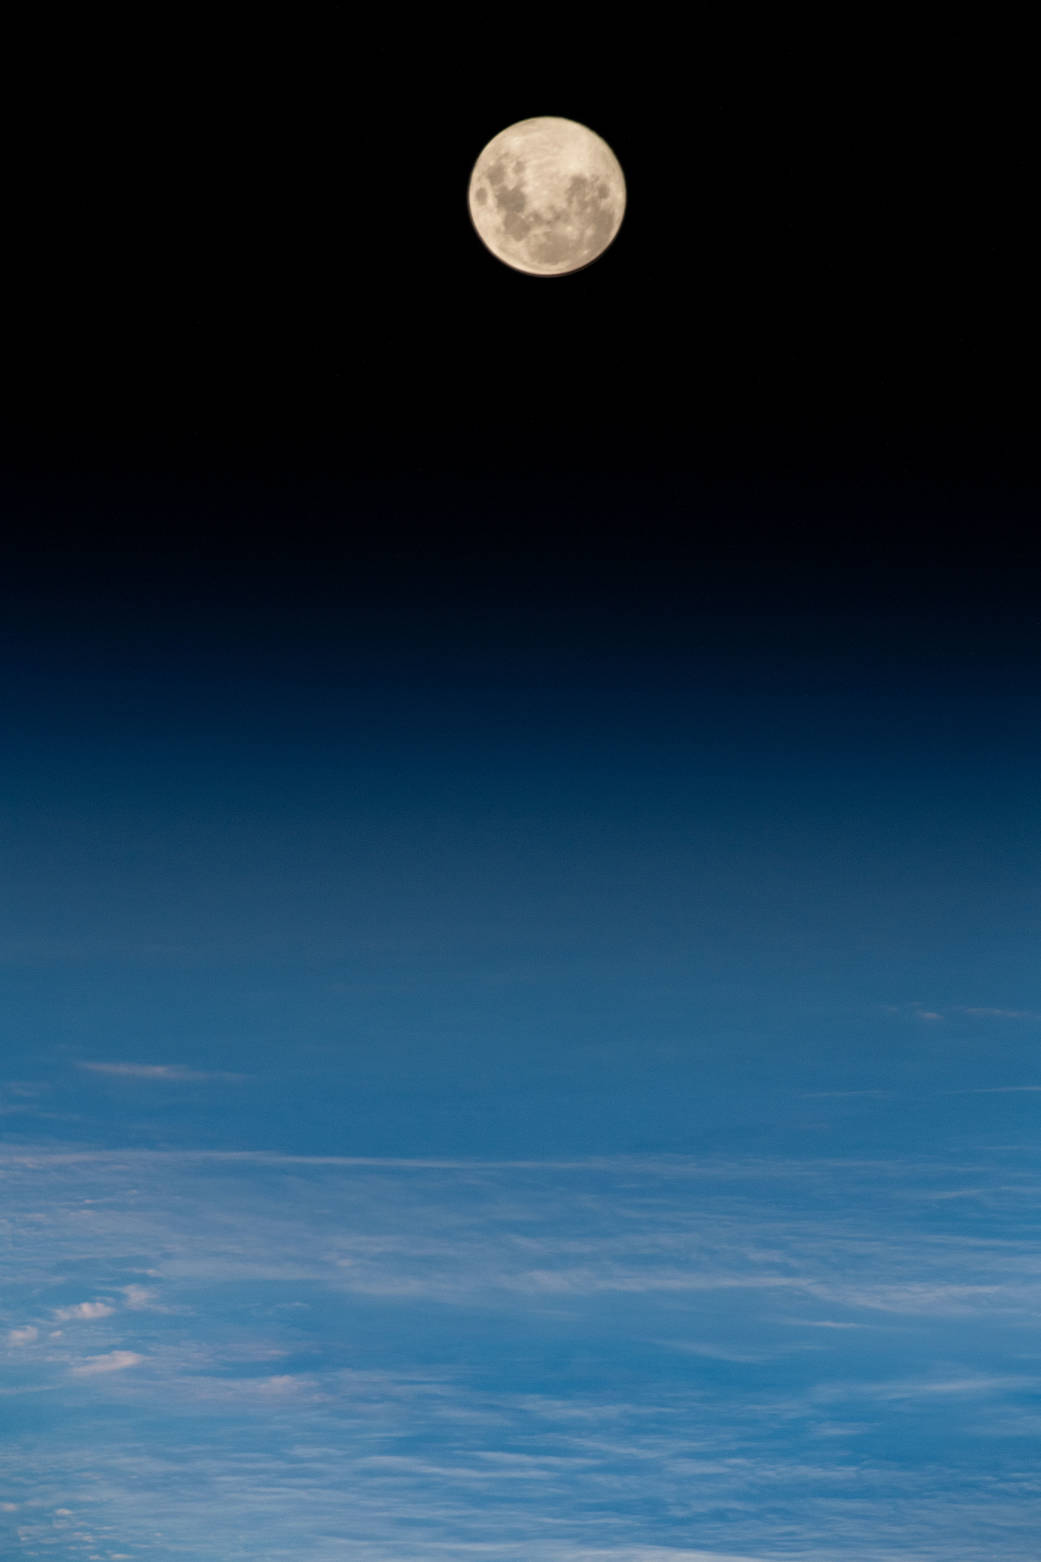 The full moon above the South Atlantic Ocean